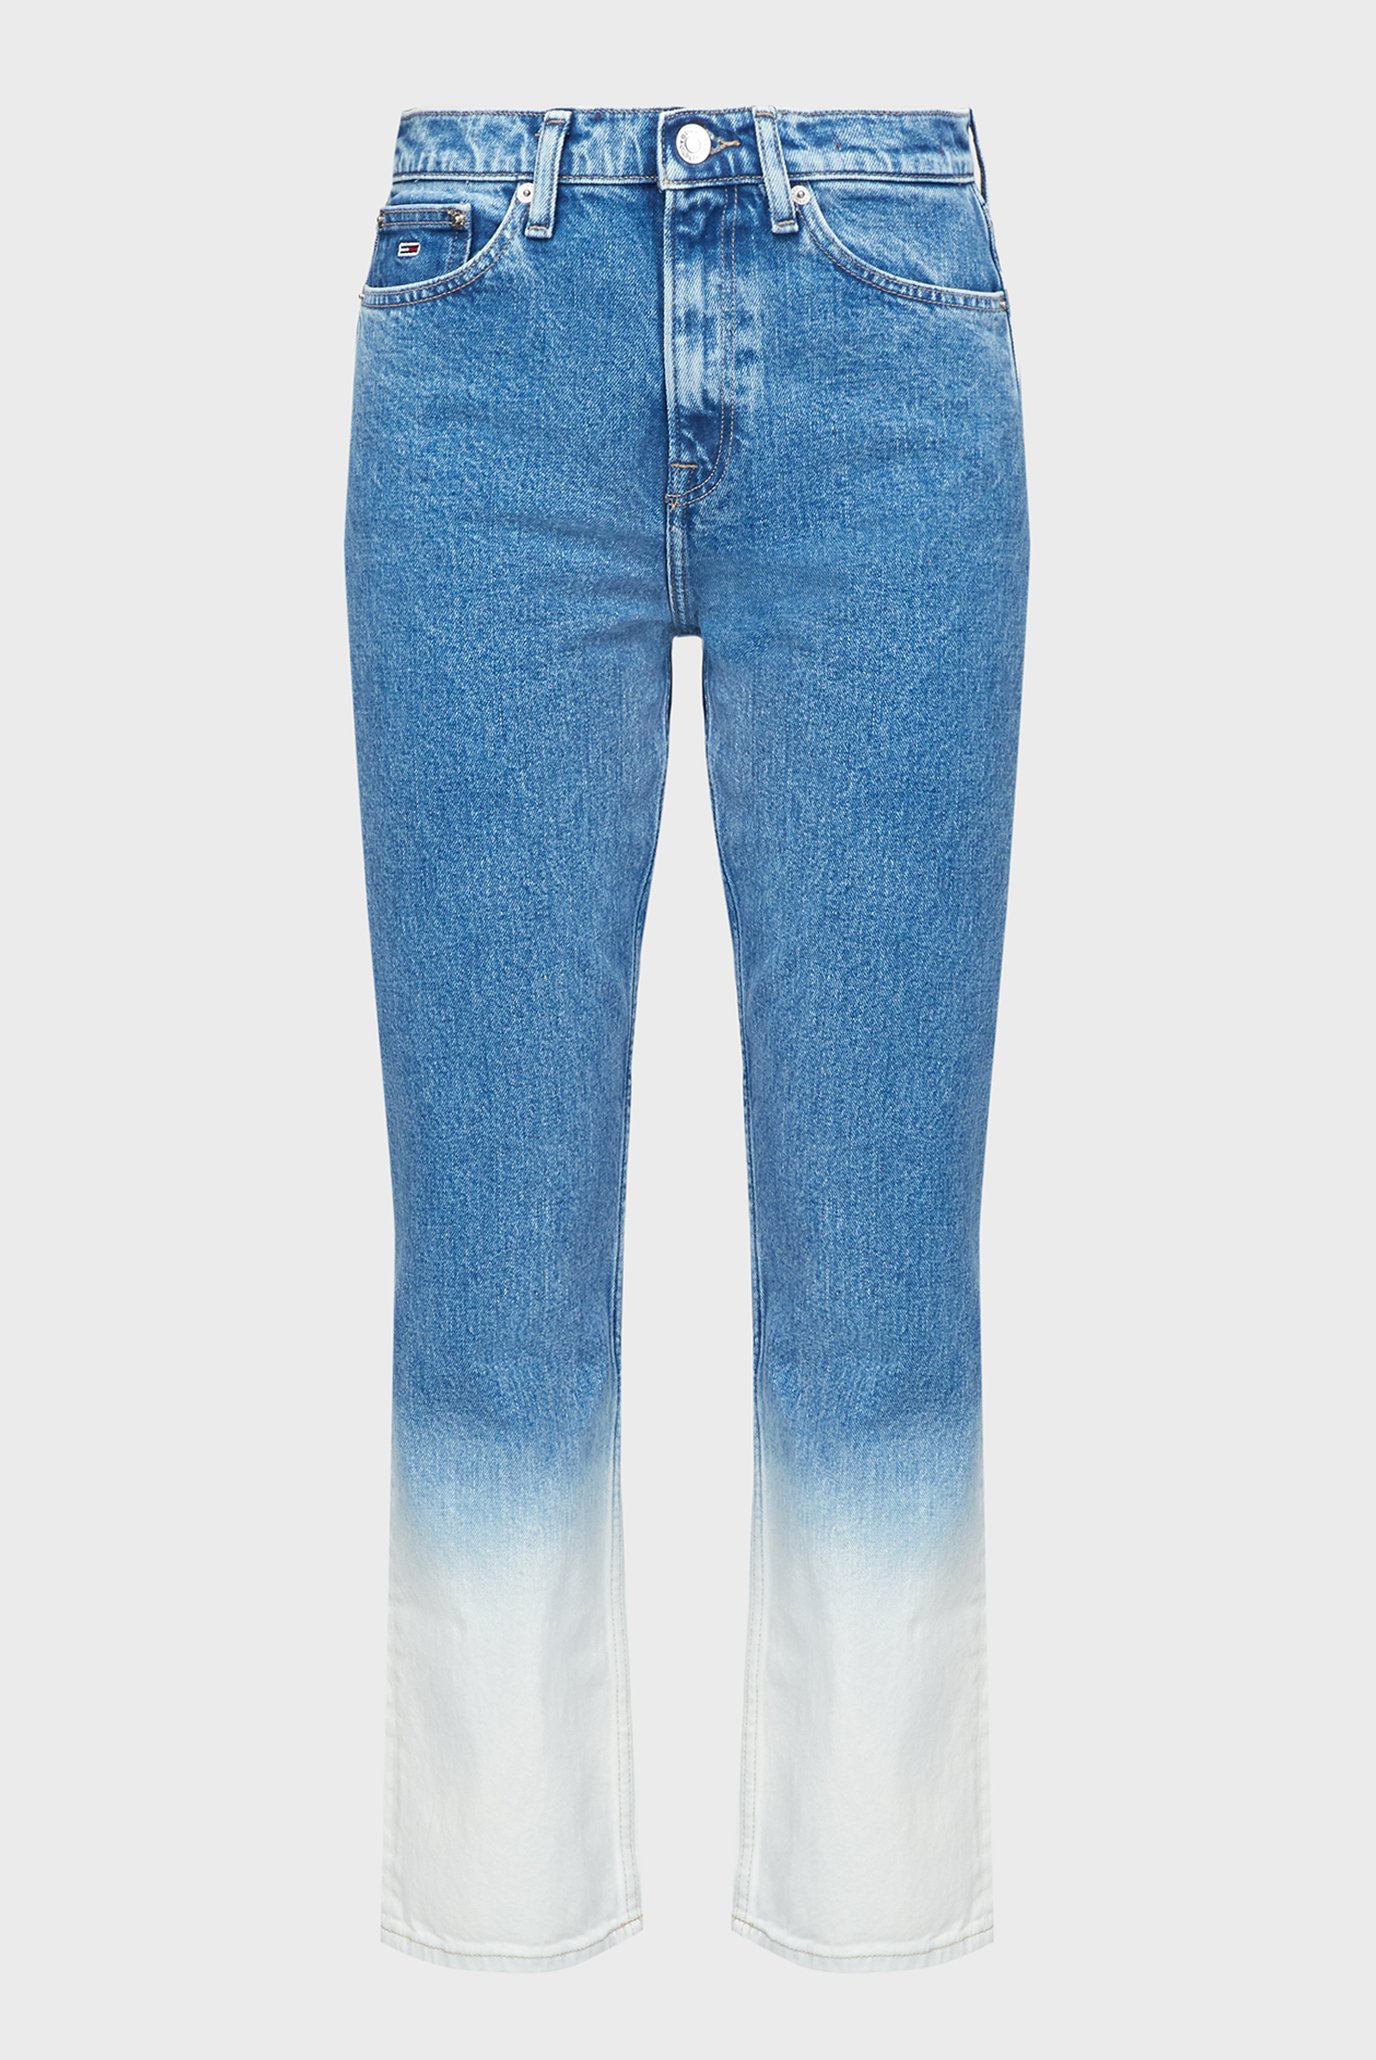 Жіночі сині джинси HARPER HR STRGHT ANKLE AG7001 1